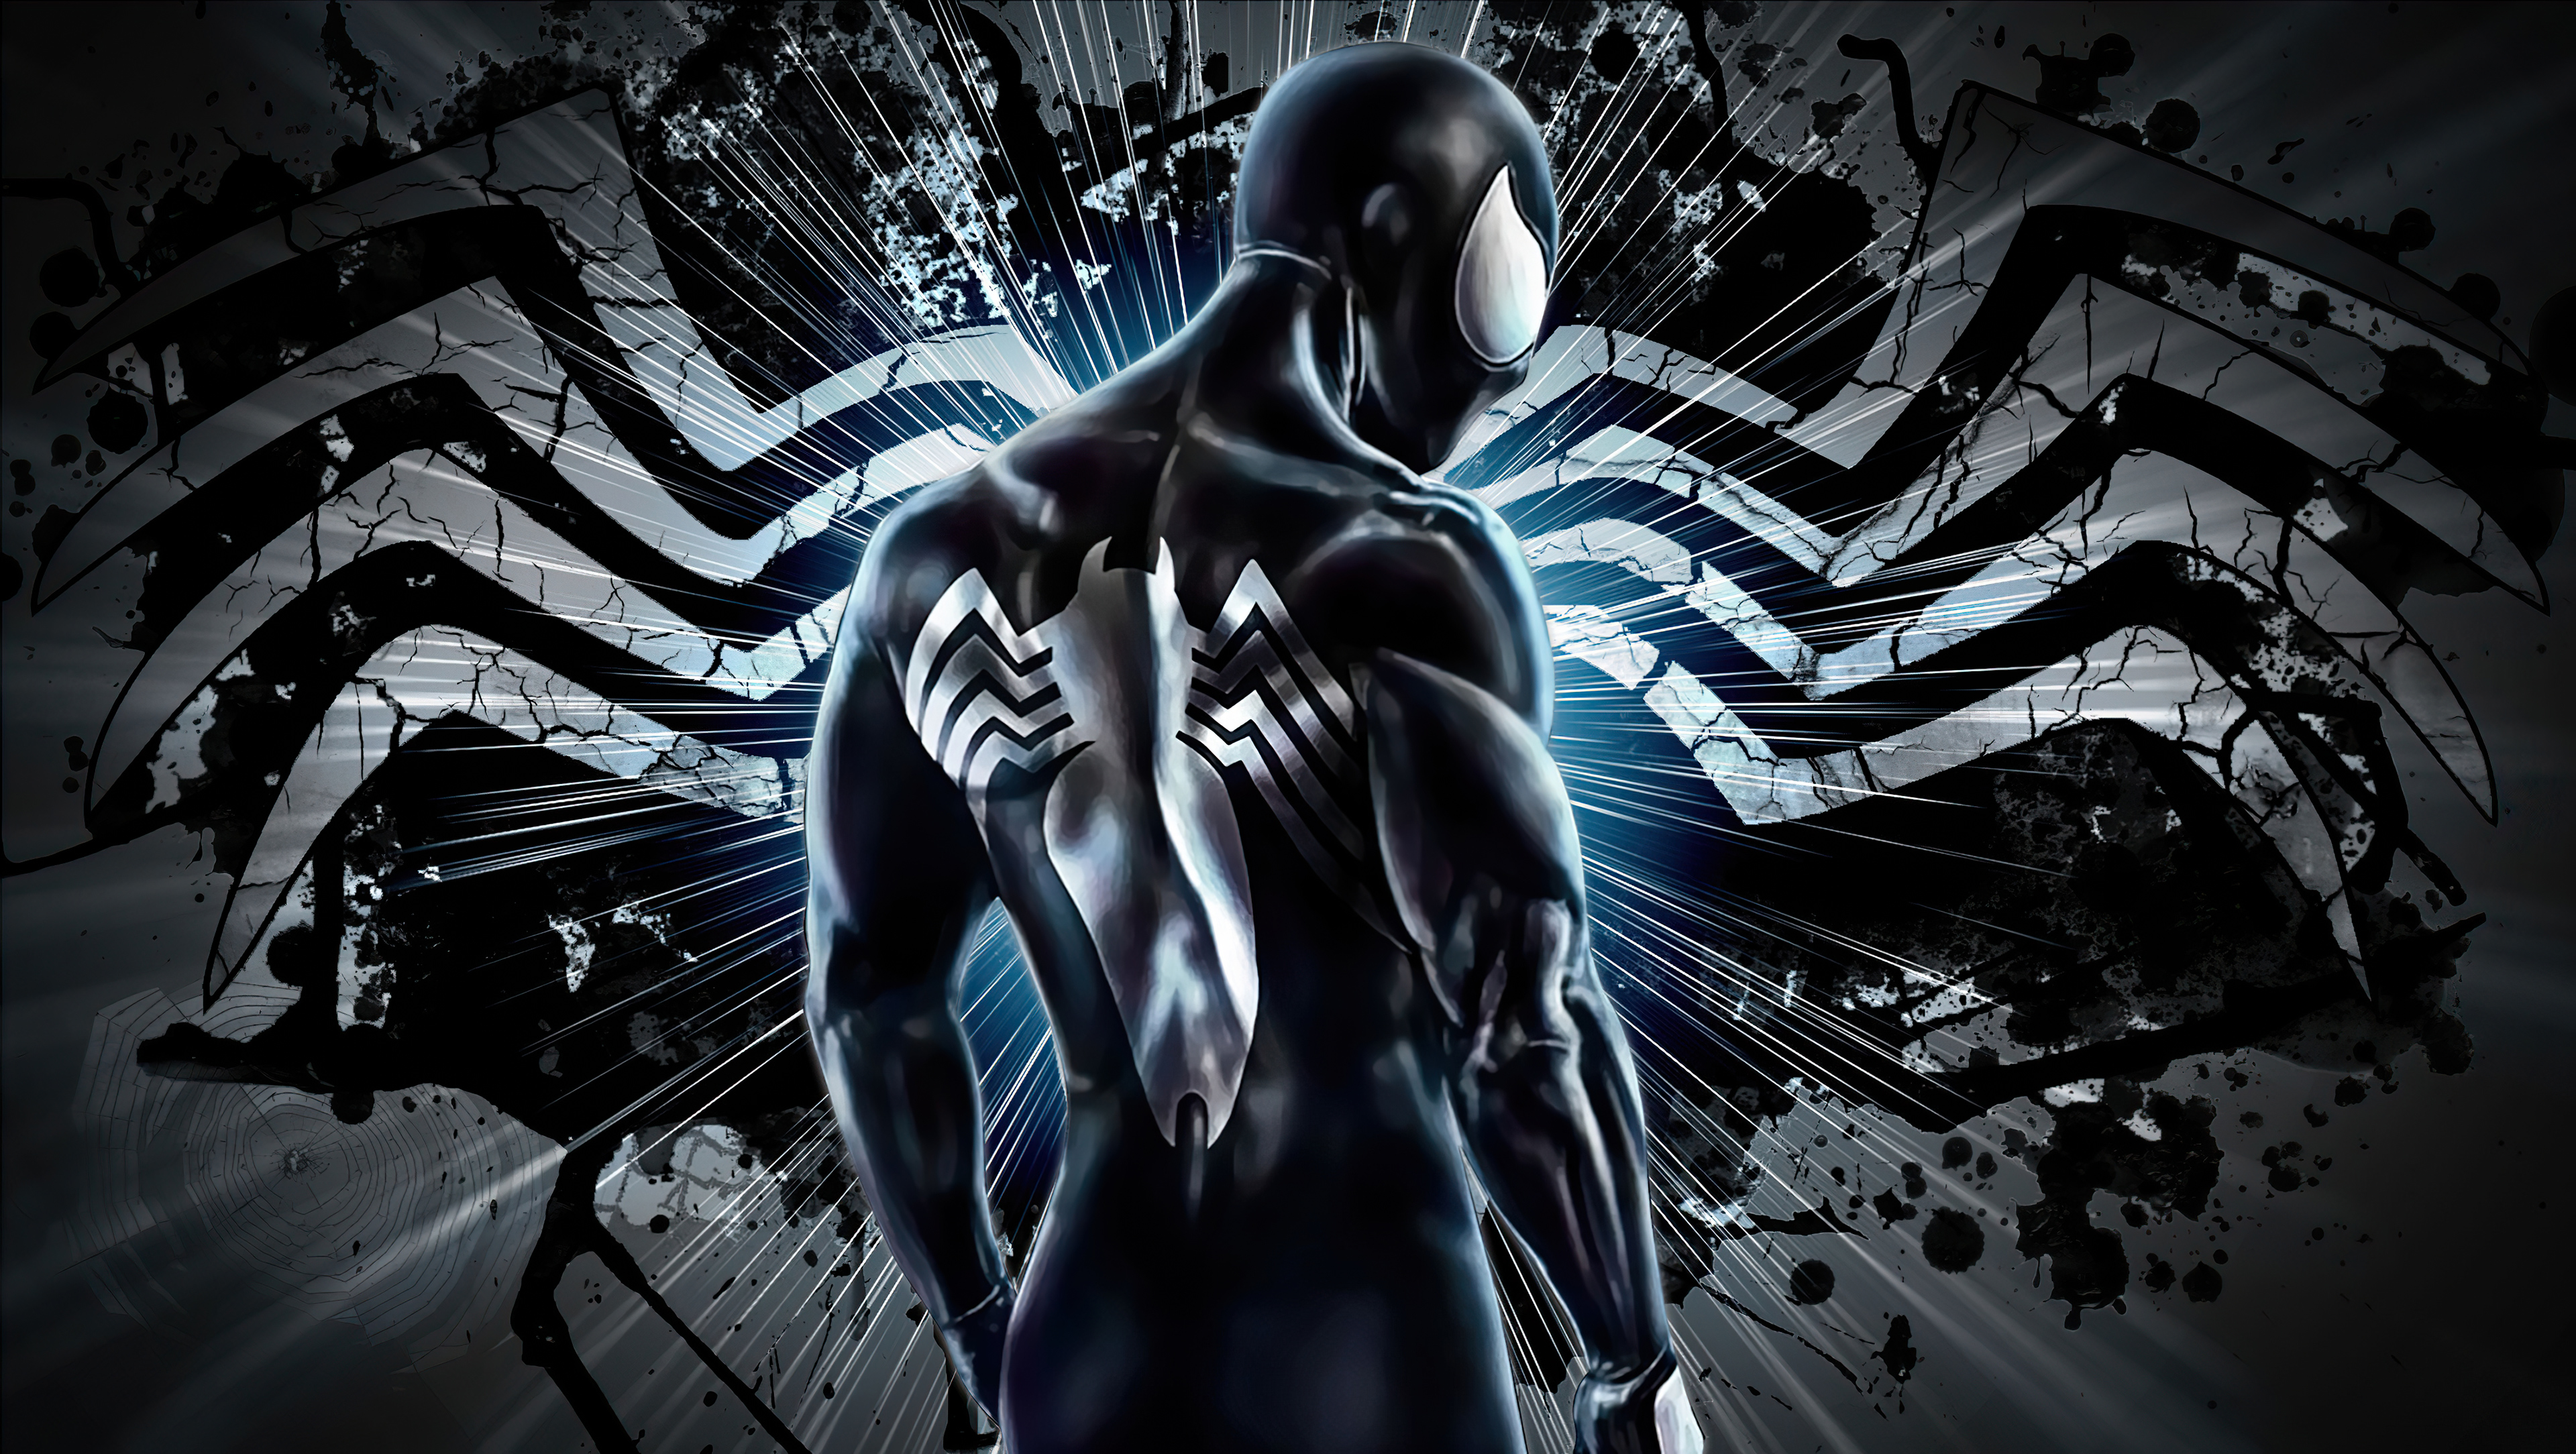 Spiderman Black Suit Wallpapers